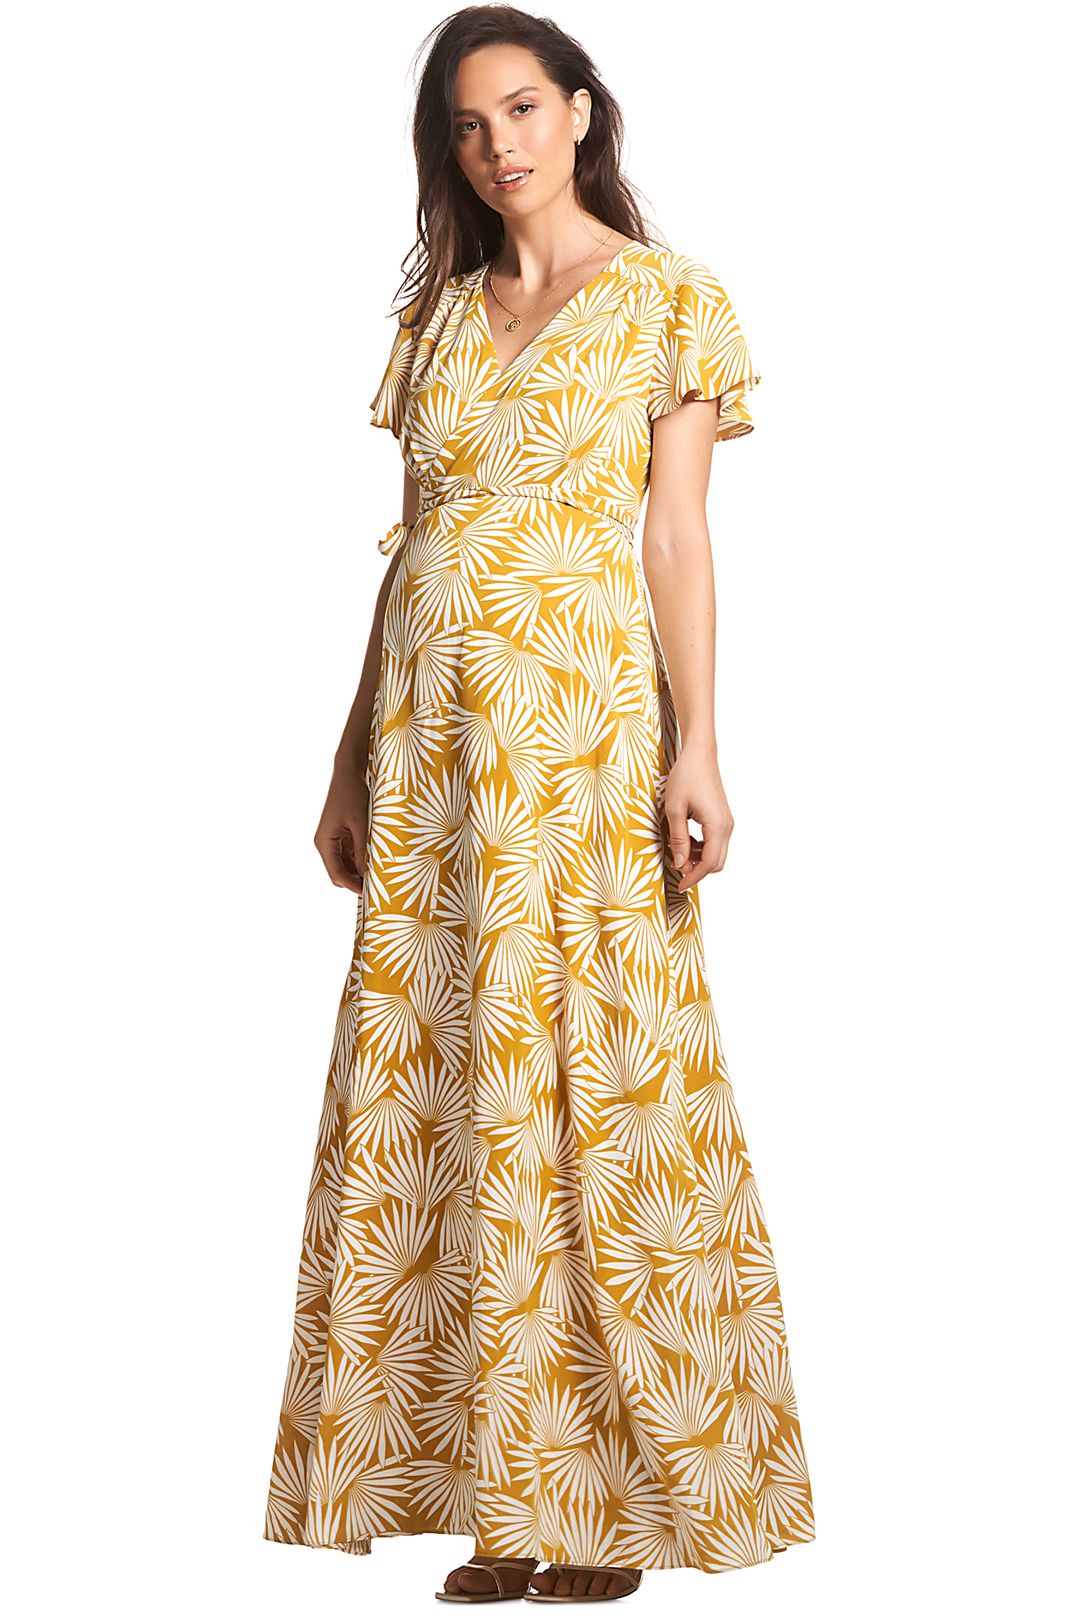 Soon-Maternity-Elizabeth-Maxi-Dress-Yellow-Sun-Print-Front